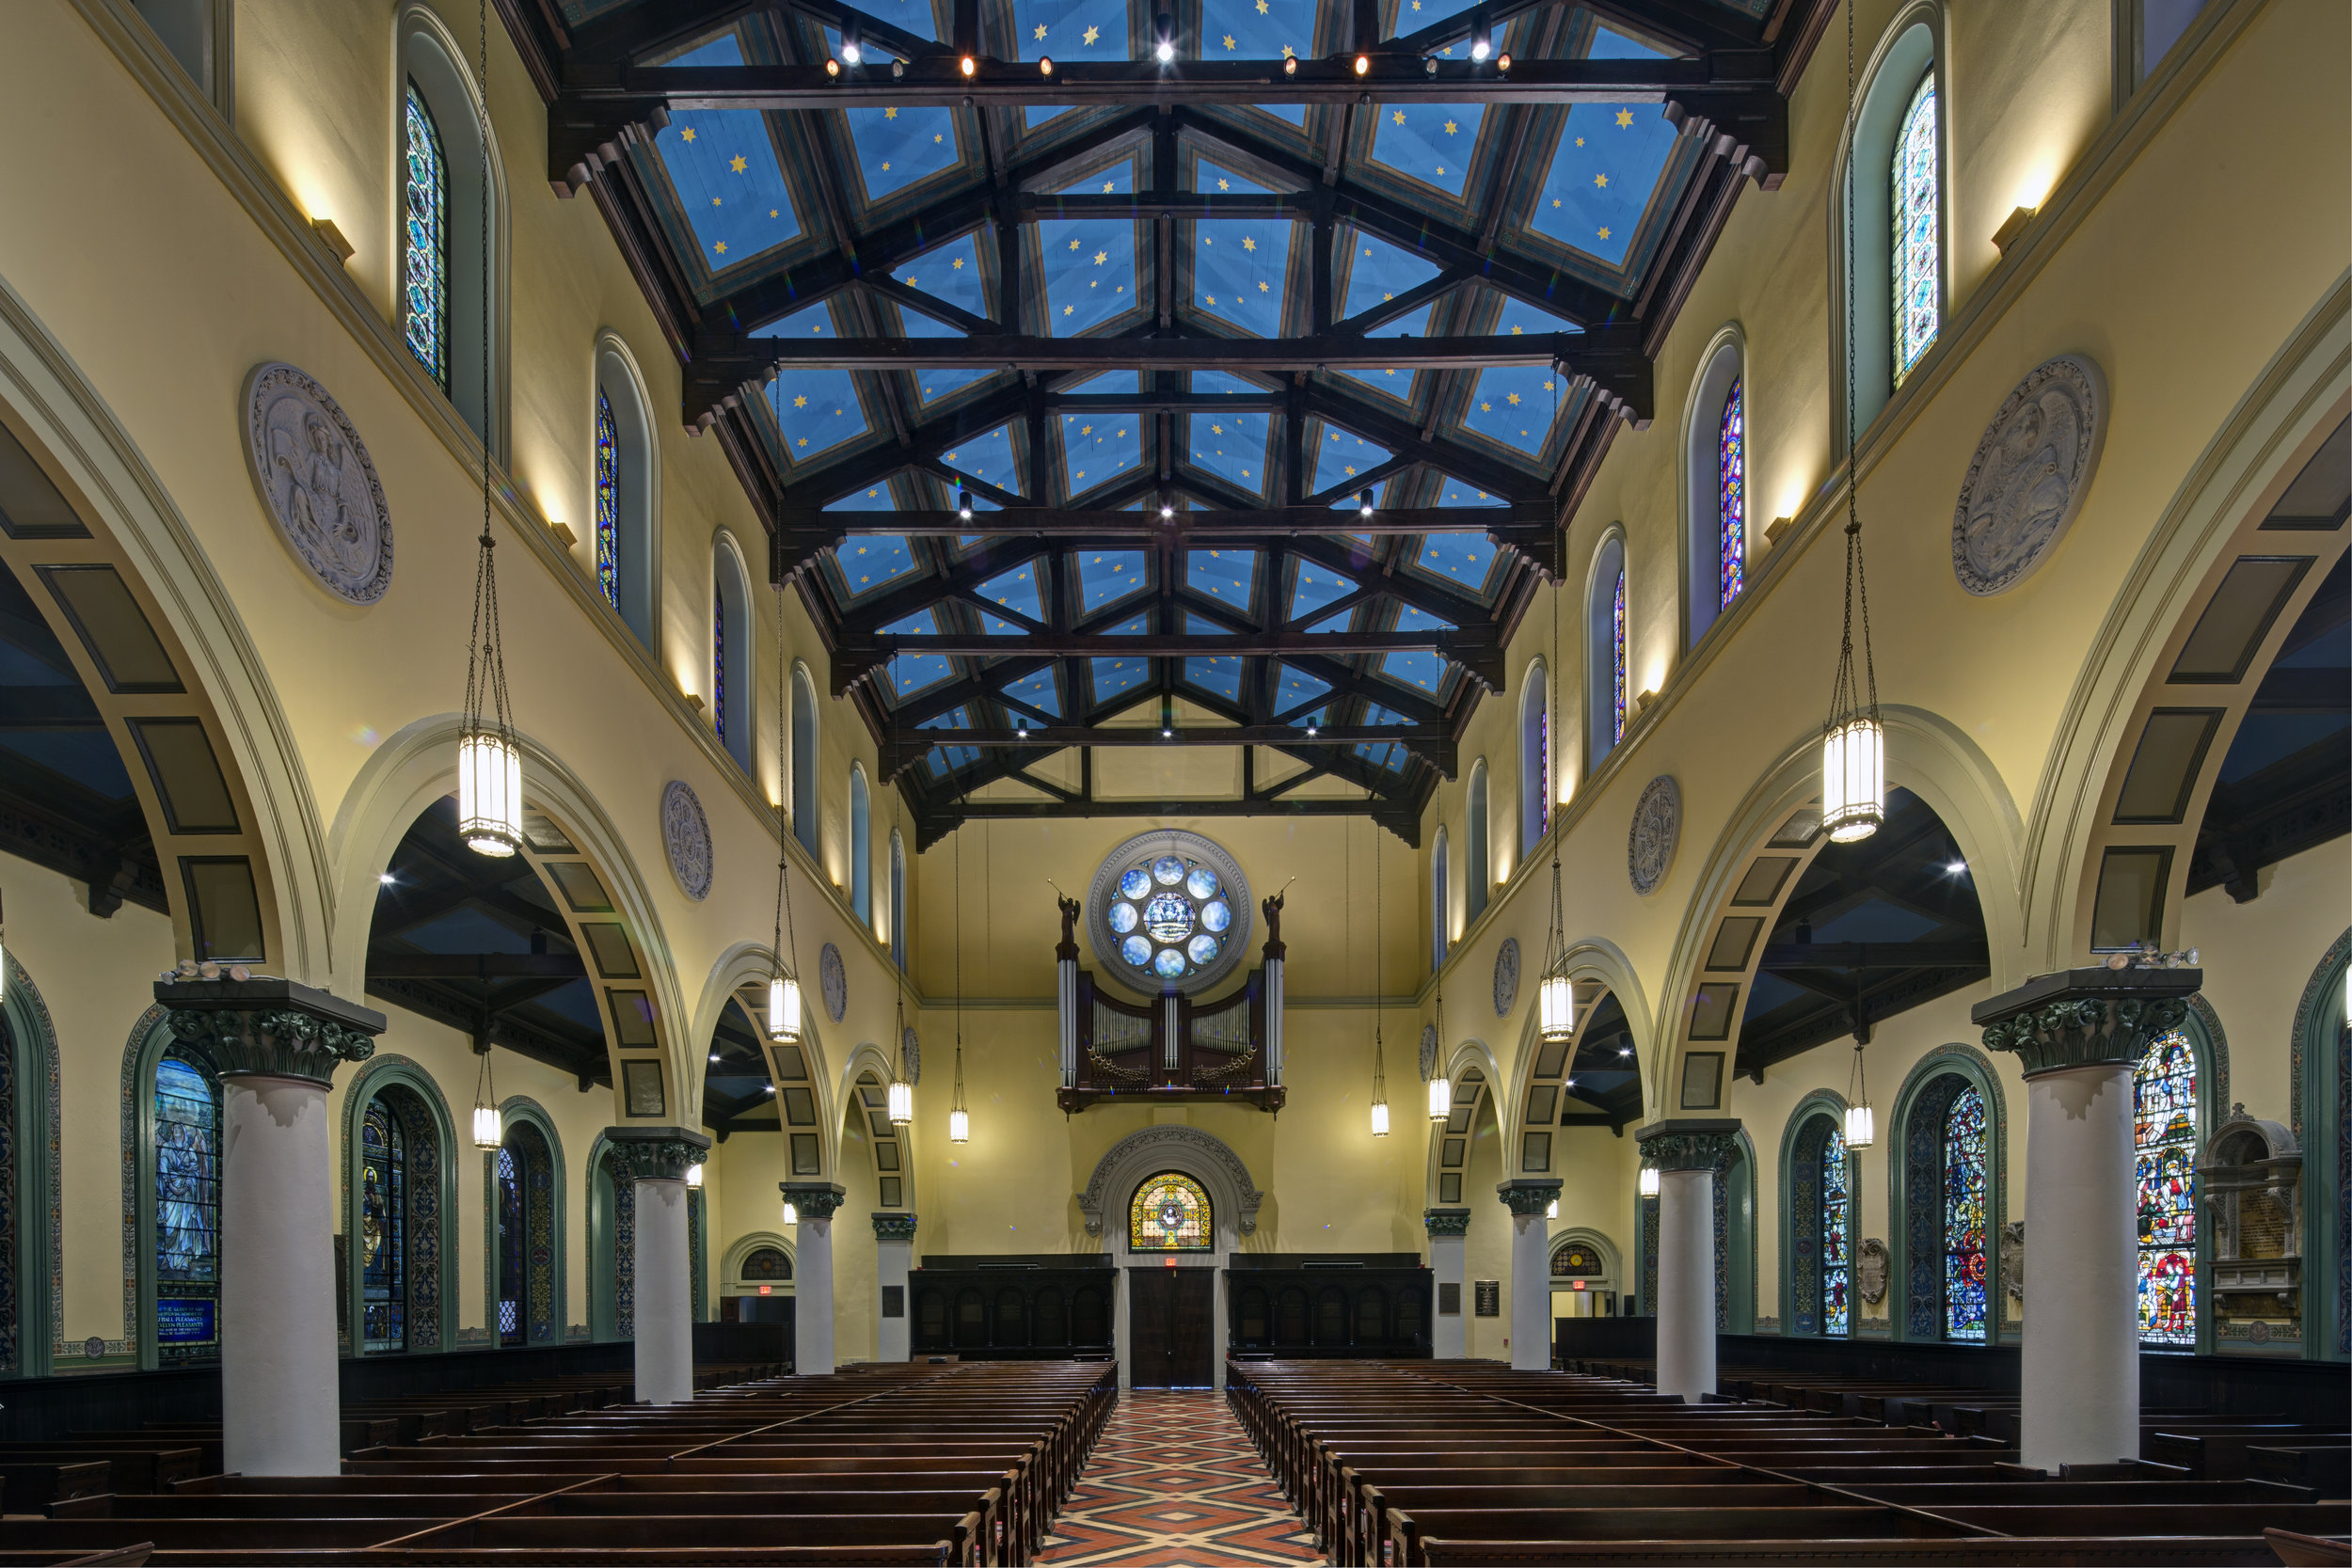 St. Paul’s Episcopal Church, after renovation